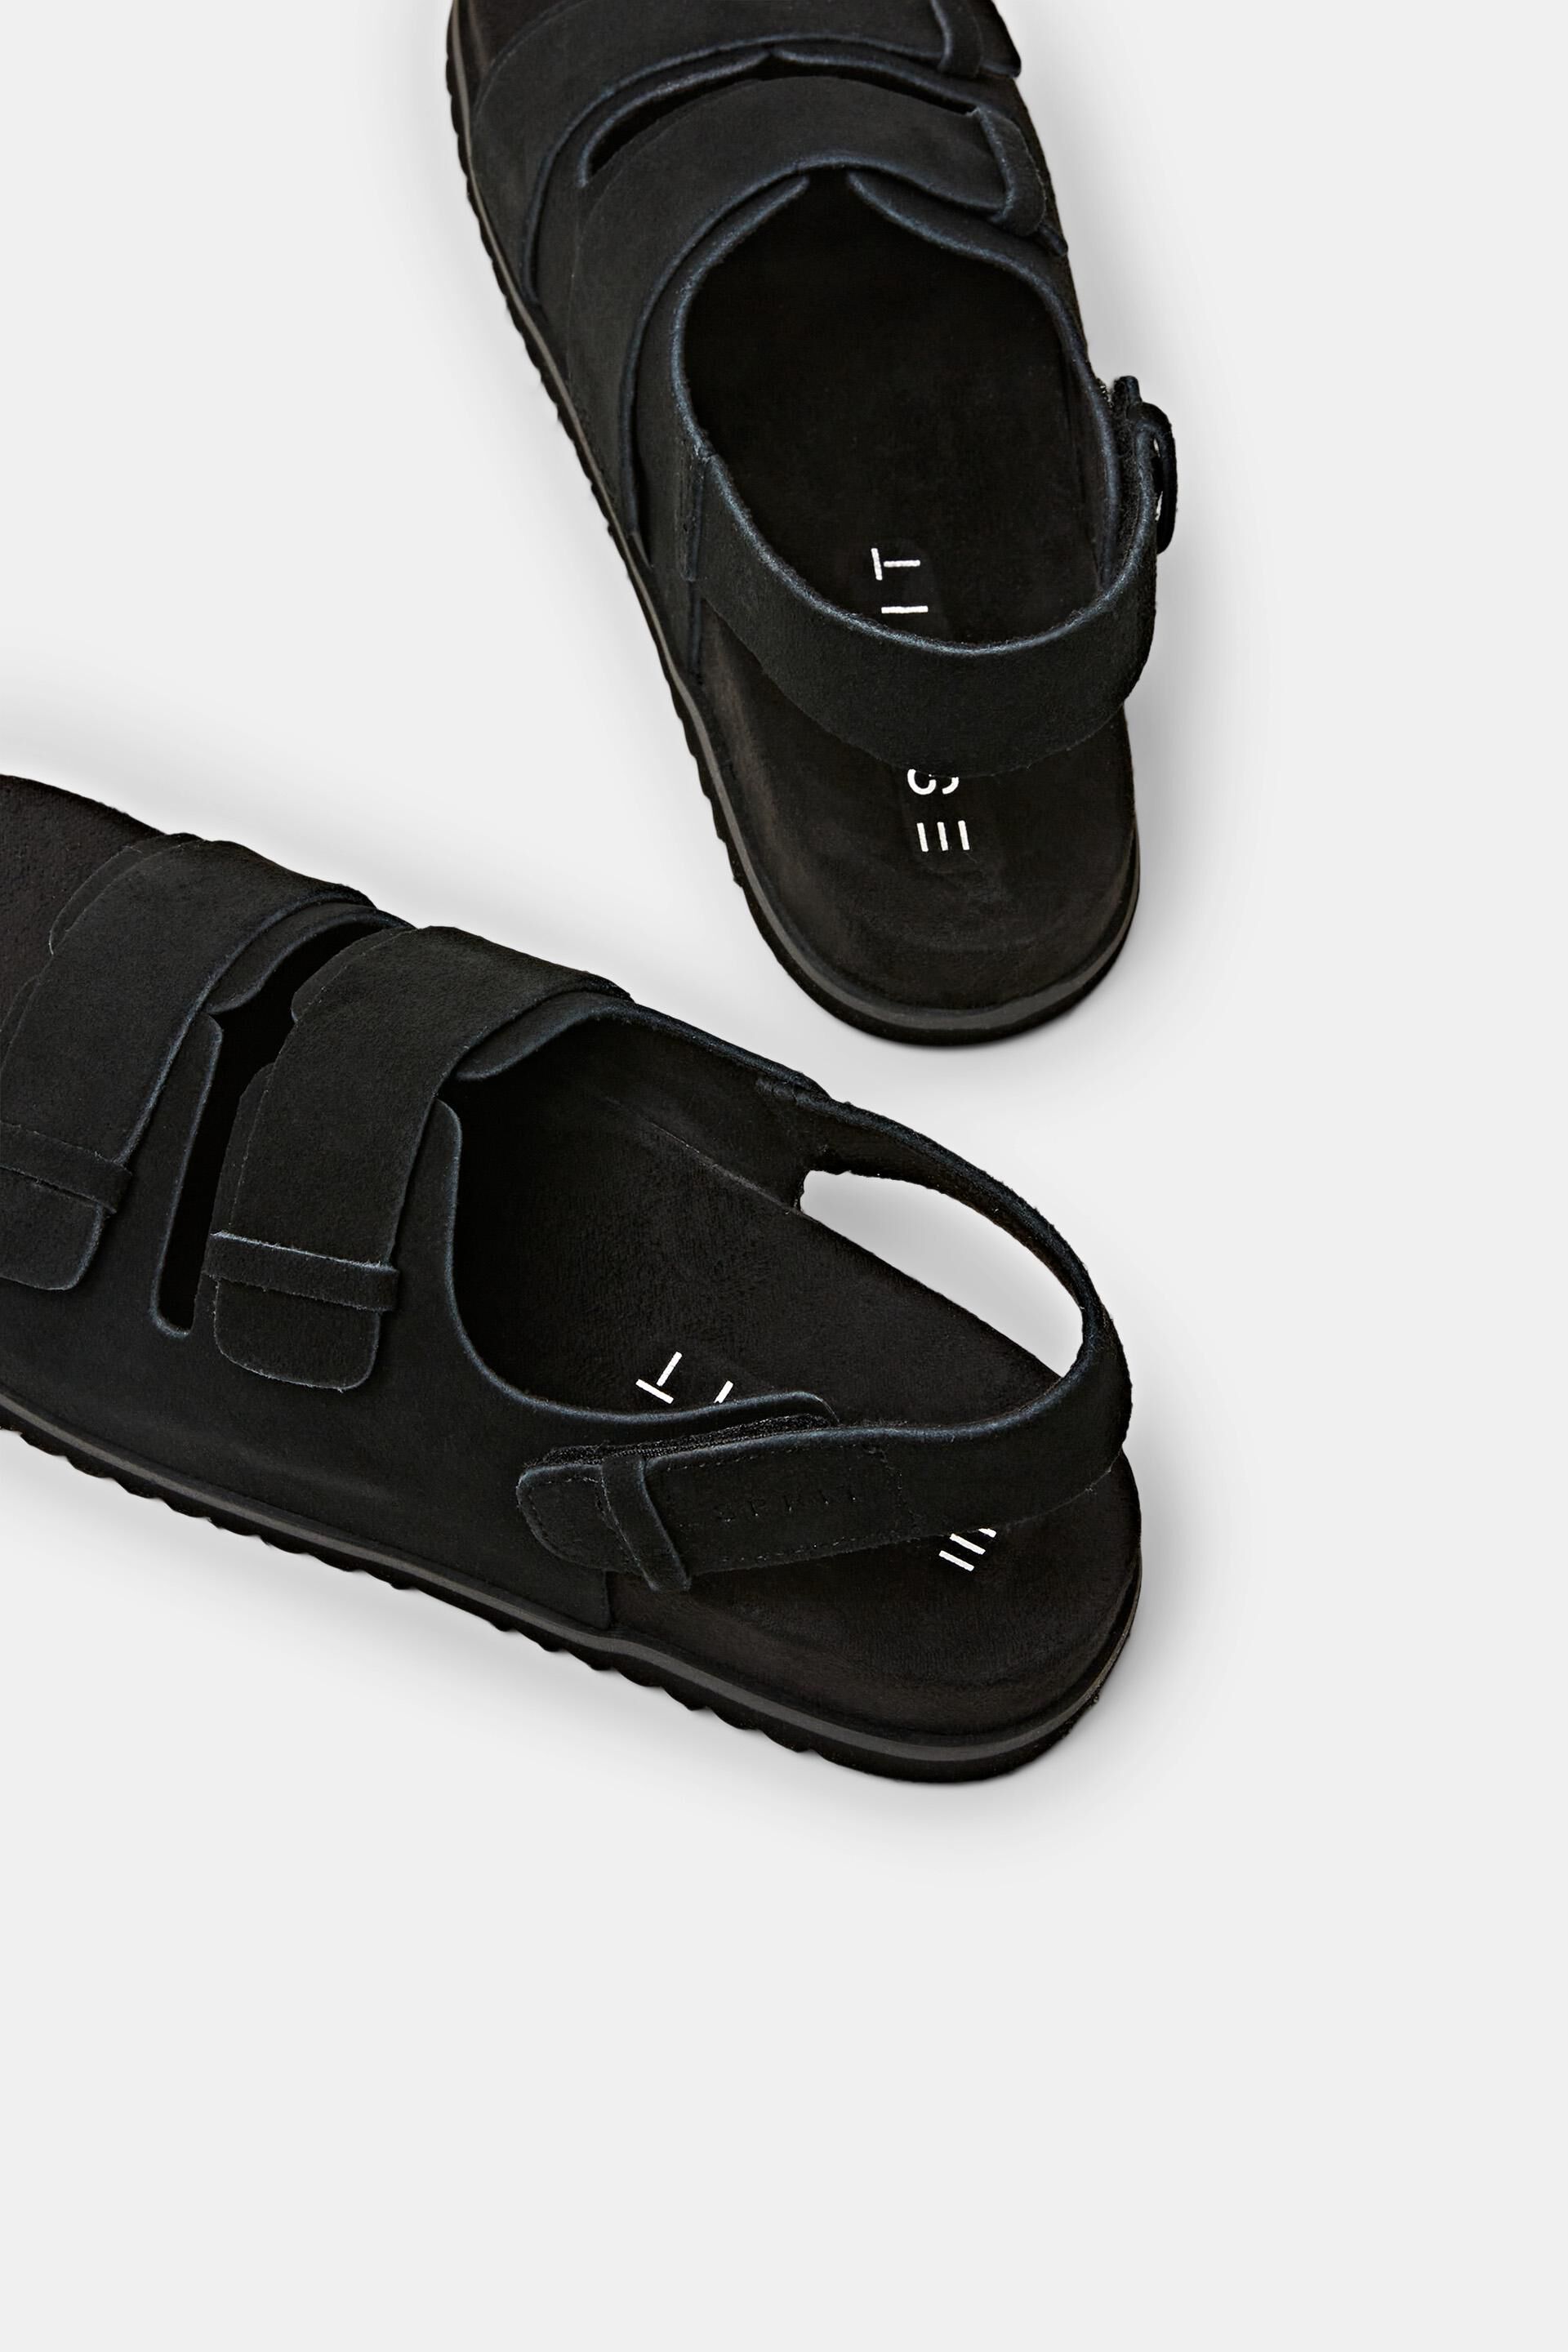 Buy Metro Women Brown Suede Leather Comfort Slip-on Sandal UK/3 EU/36  (44-32) at Amazon.in